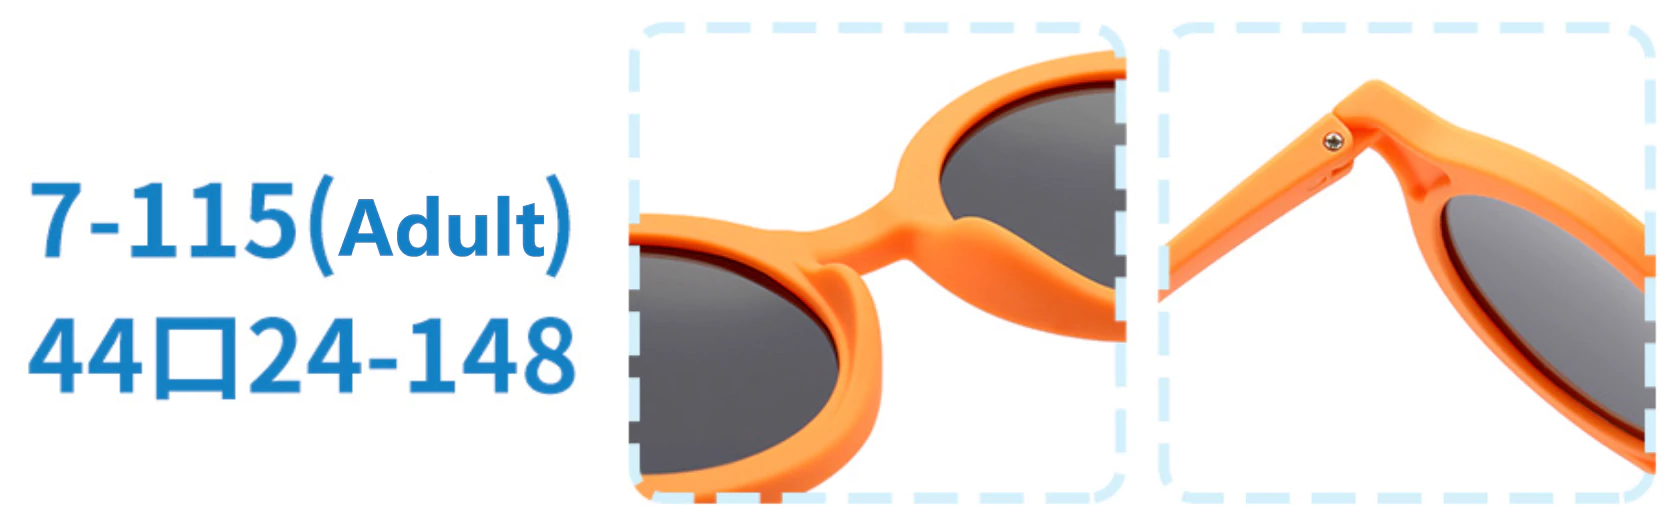 Adult sunglasses Model 7115 Dimensions Detail Shooting